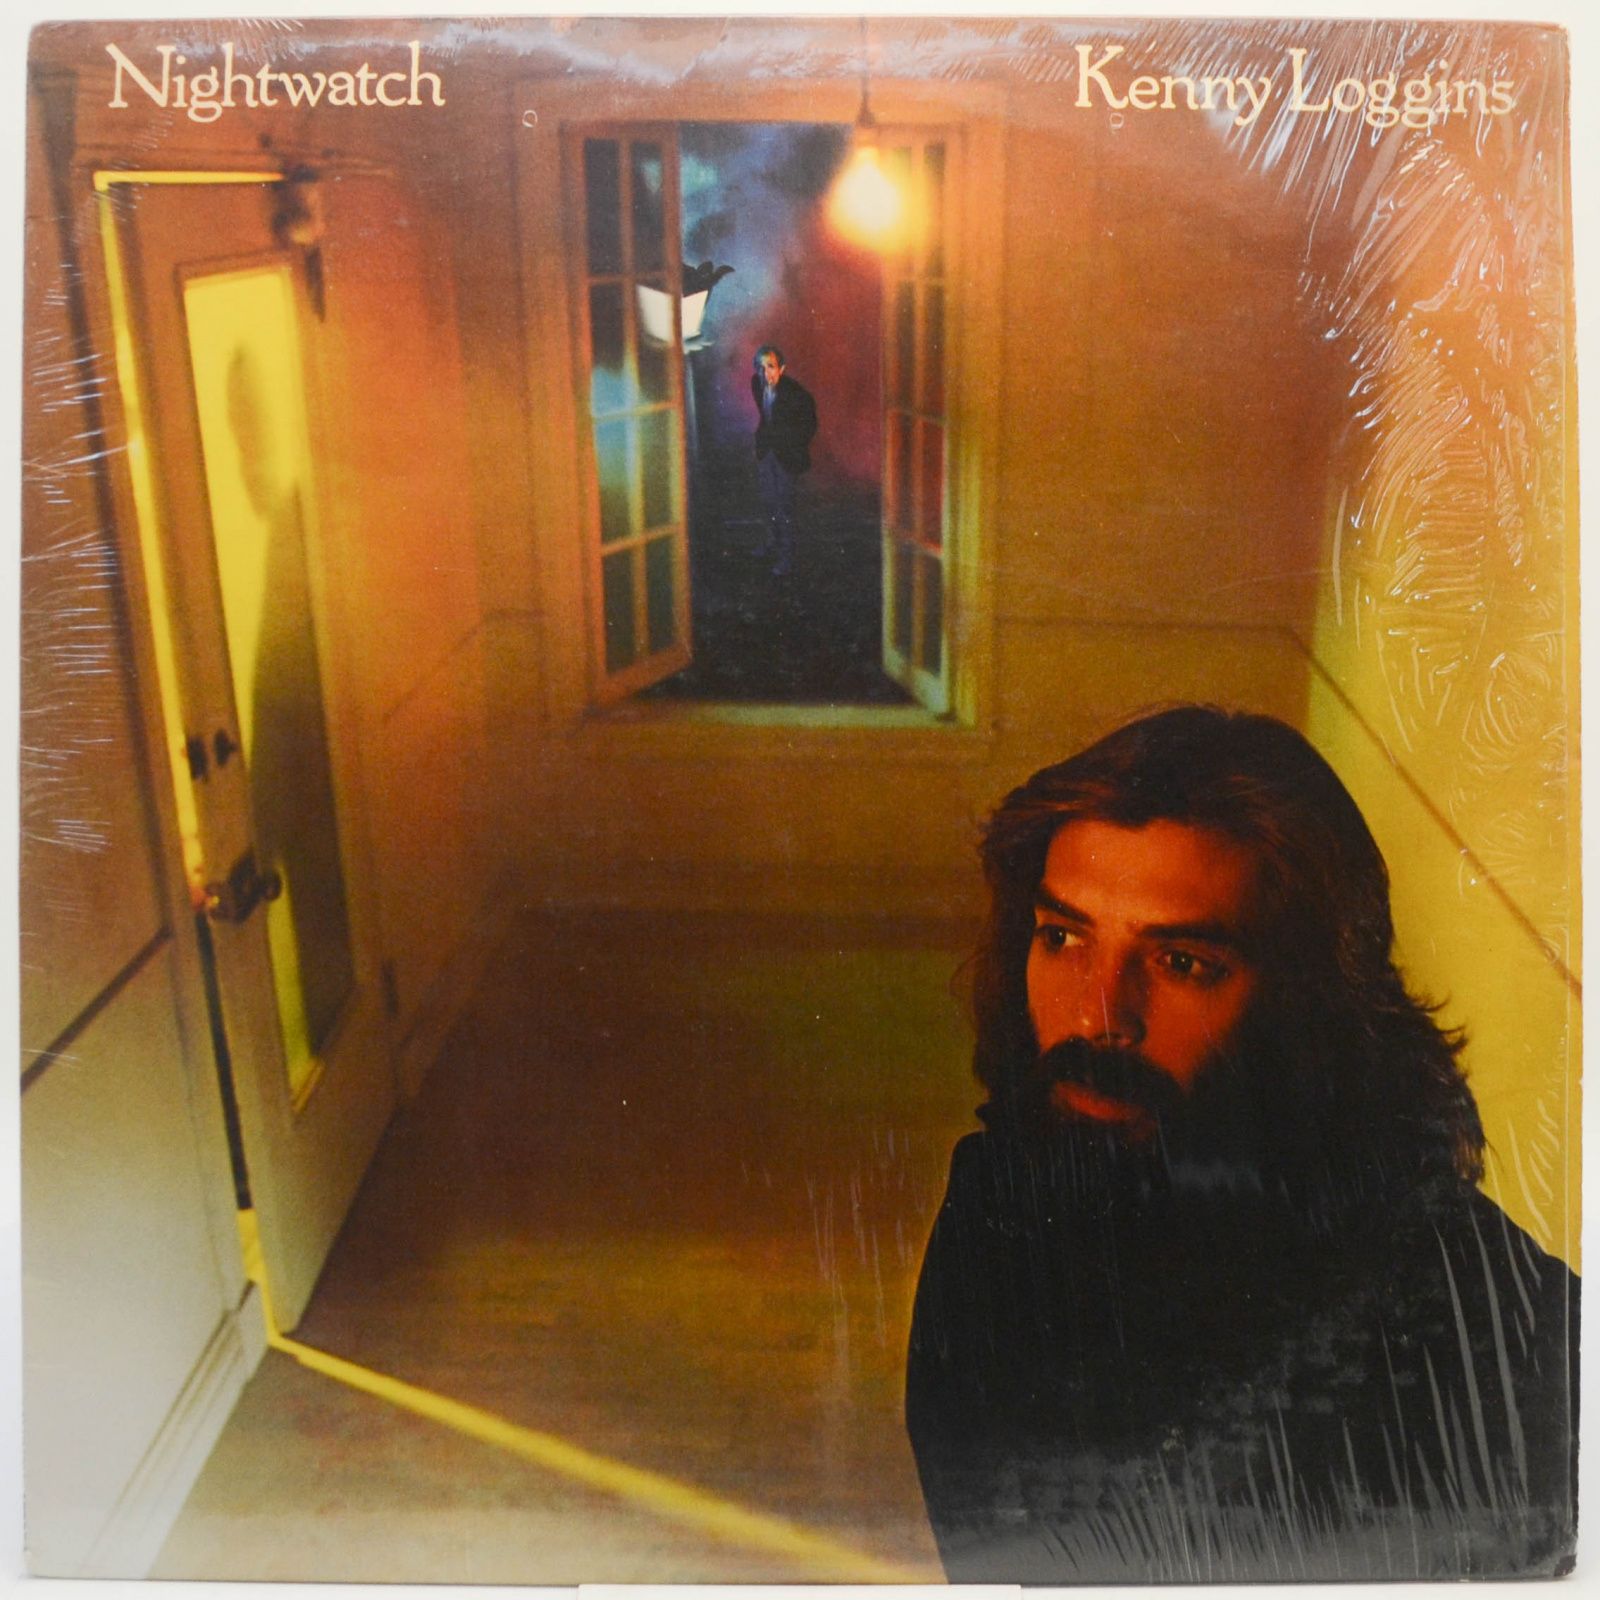 Nightwatch (USA), 1978